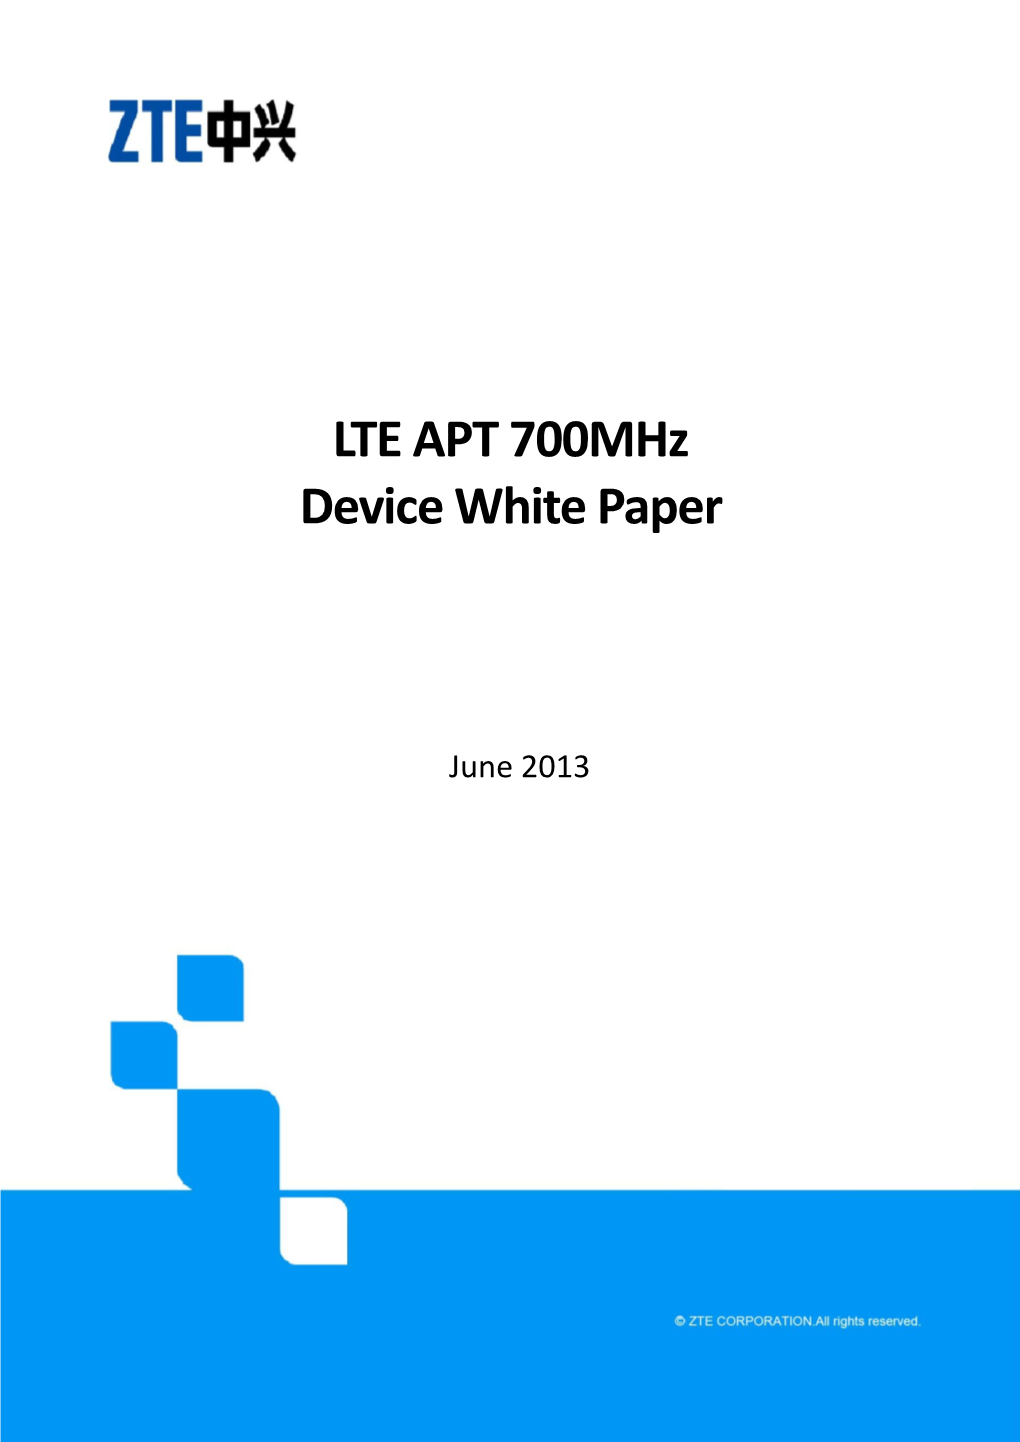 LTE APT 700Mhz Device White Paper 2013